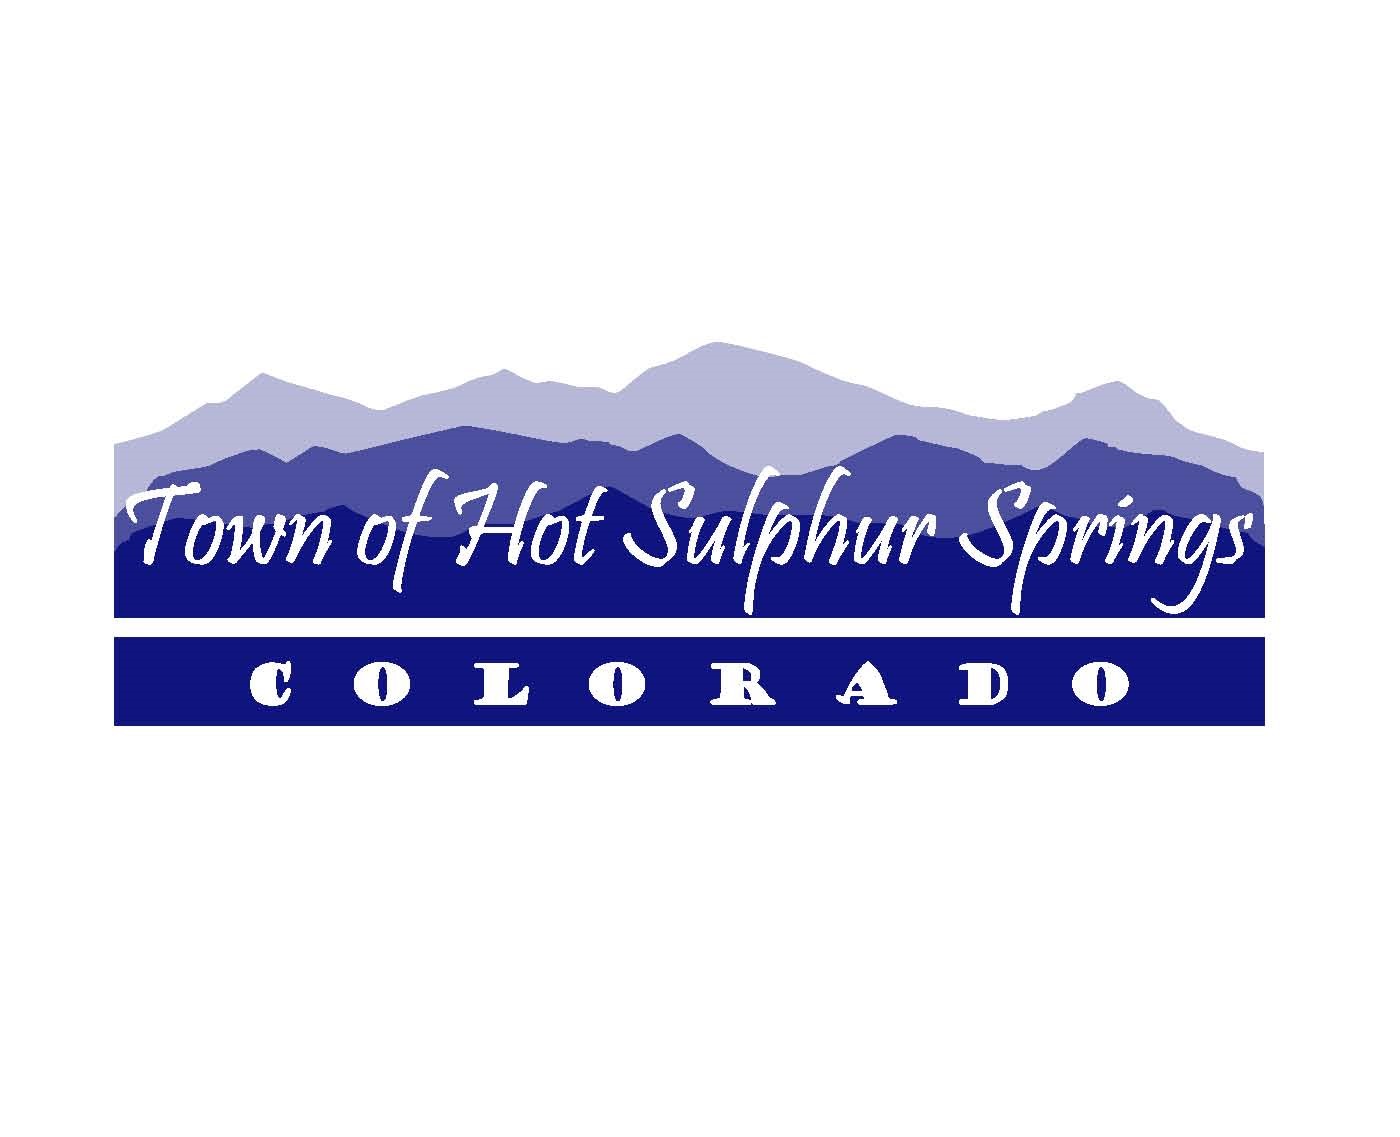 Organization logo of Town of Hot Sulphur Springs